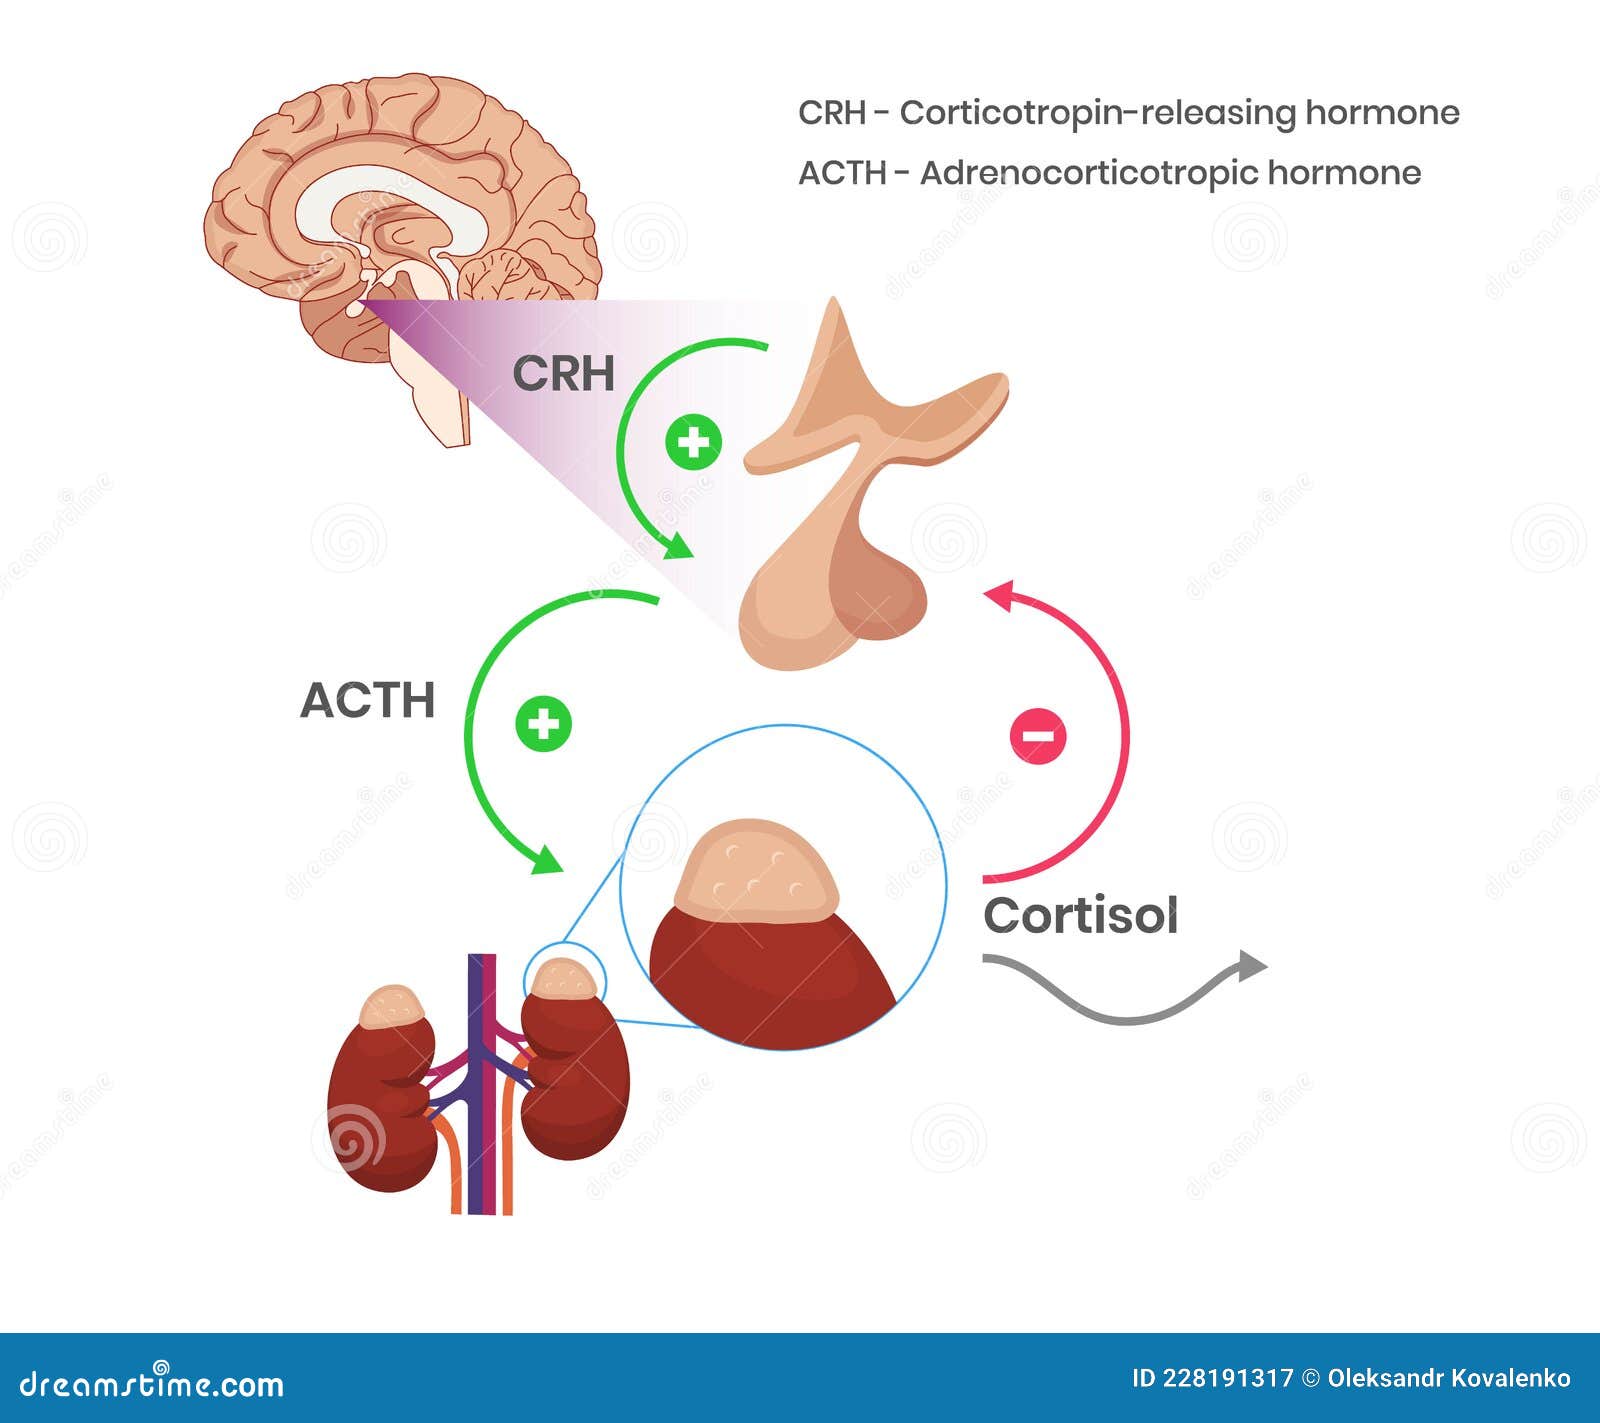 hypothalamicÃ¢â¬âpituitaryÃ¢â¬âadrenal axis physiology . cortisol production schematic drawing